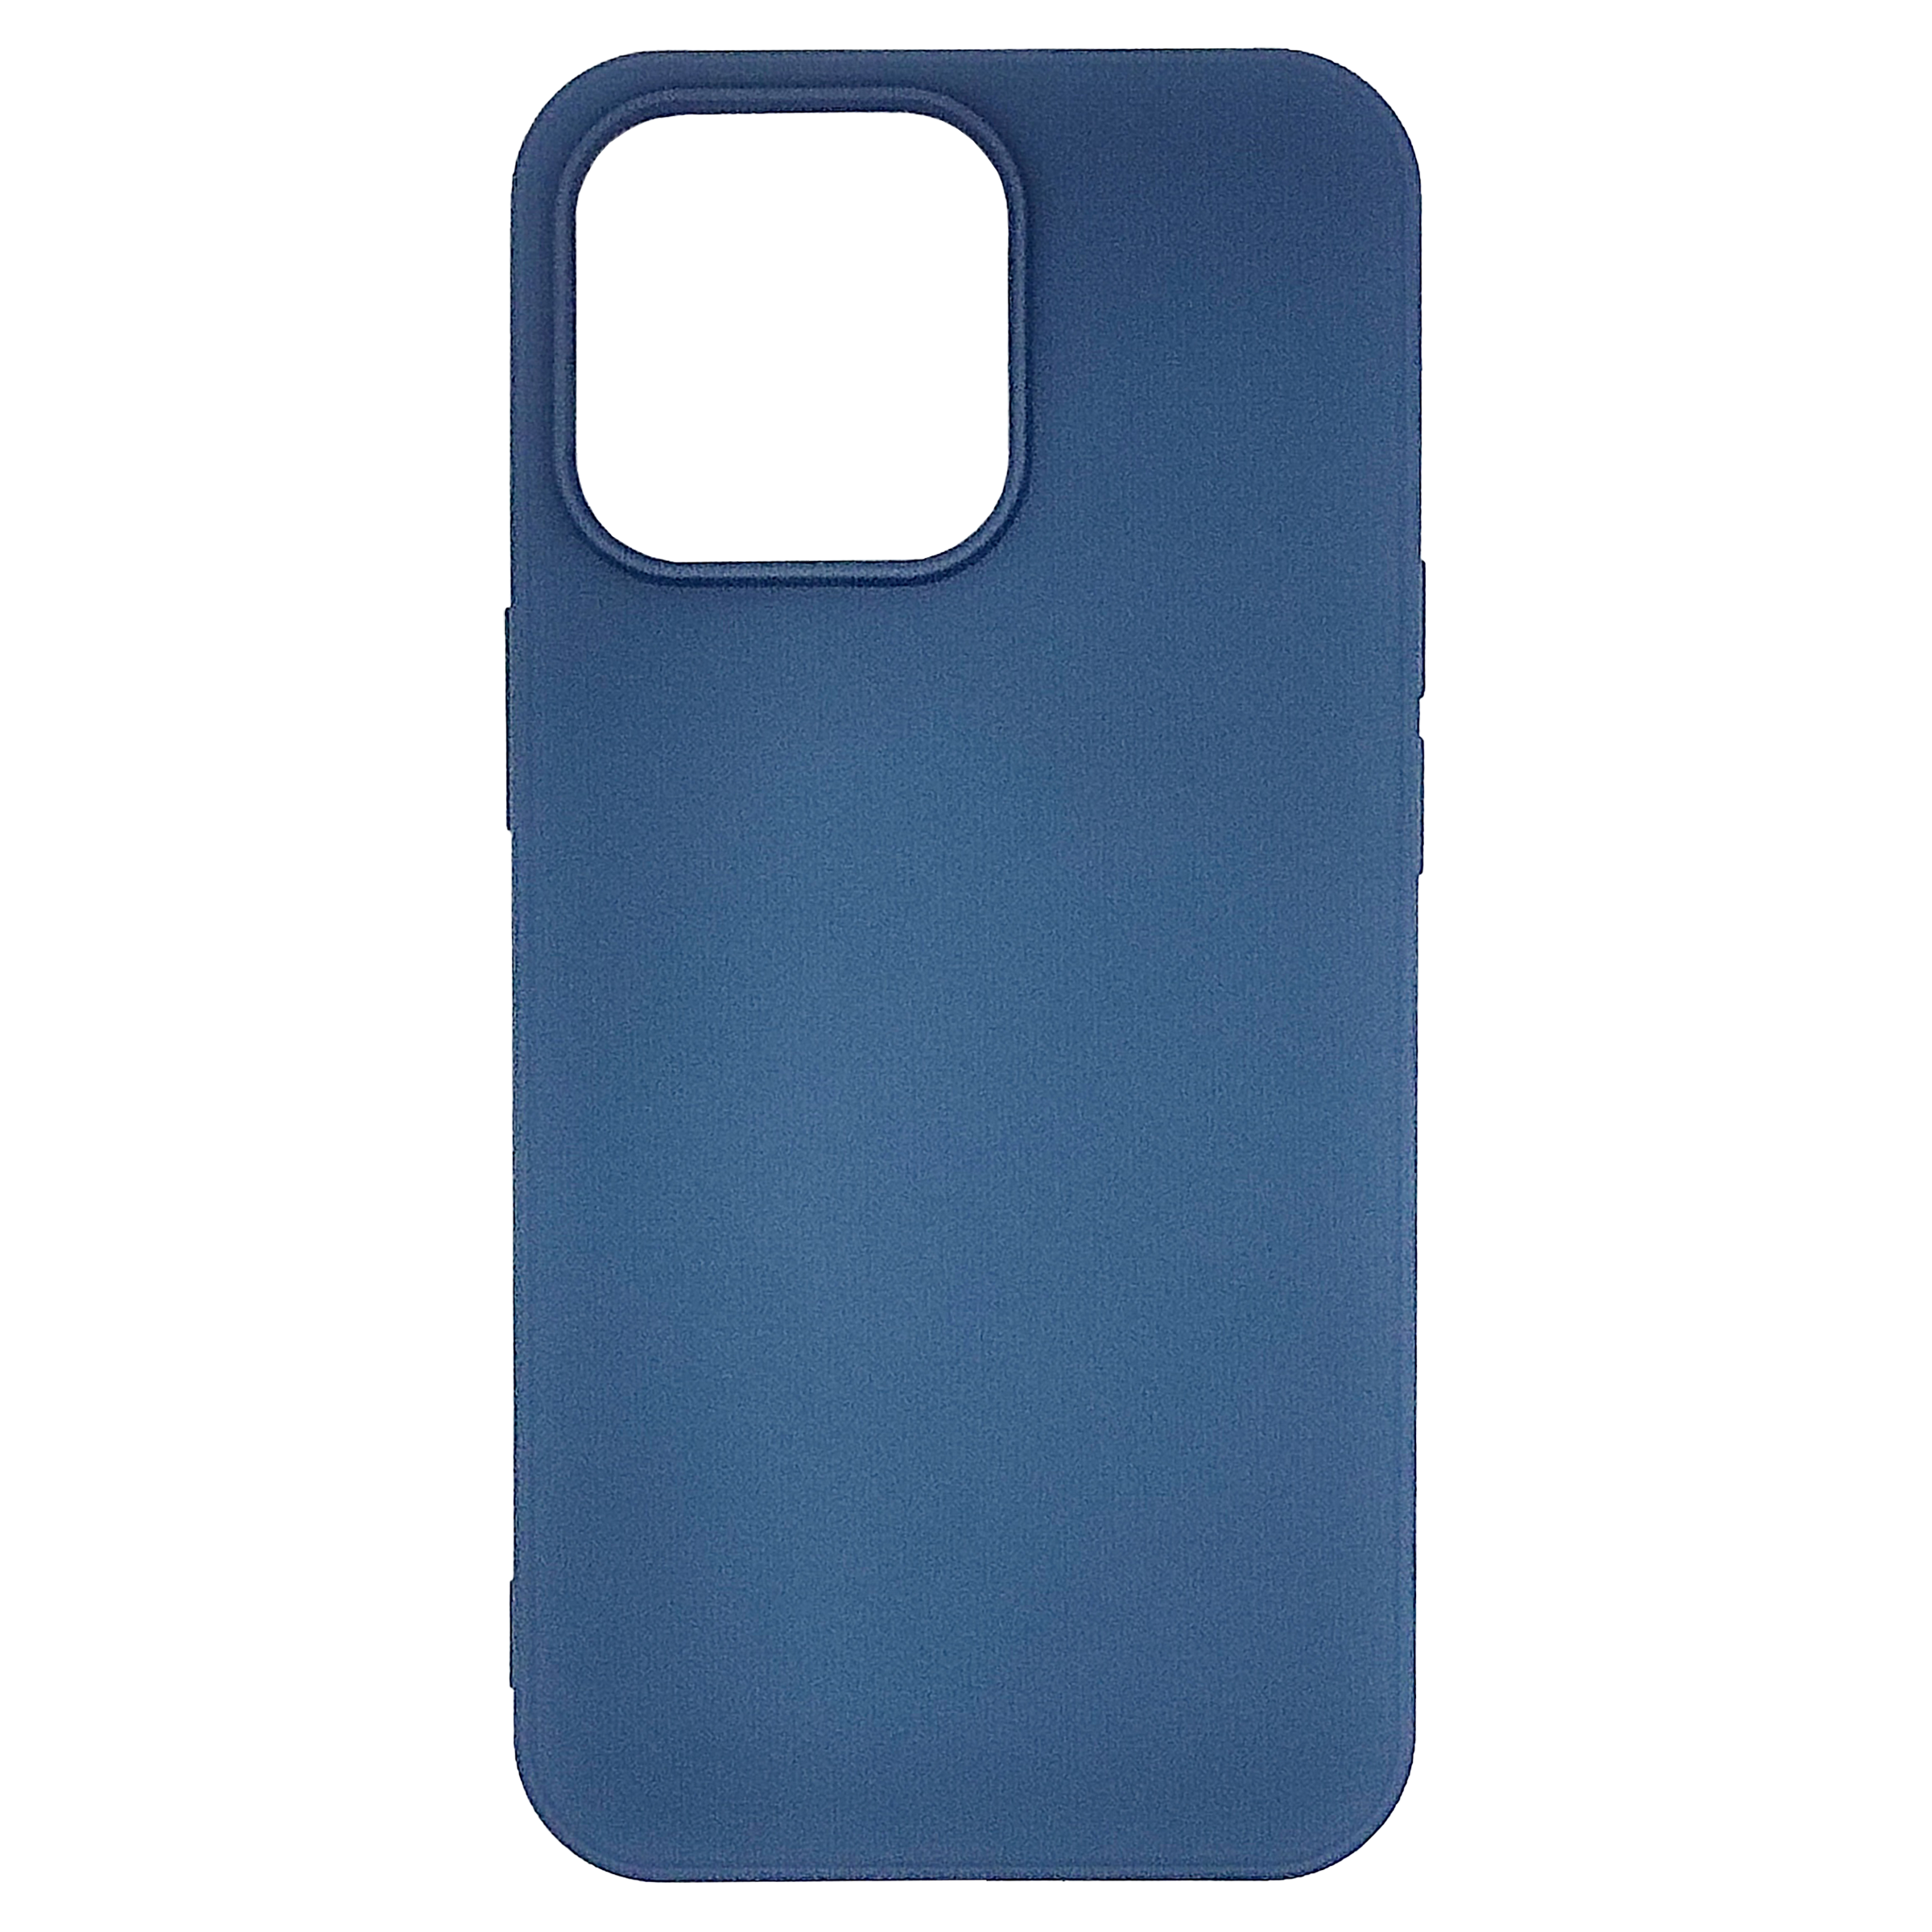 Soundrevo TPU Back Case For iPhone 13 Pro Max (Anti-Slip, C013PM, Blue)